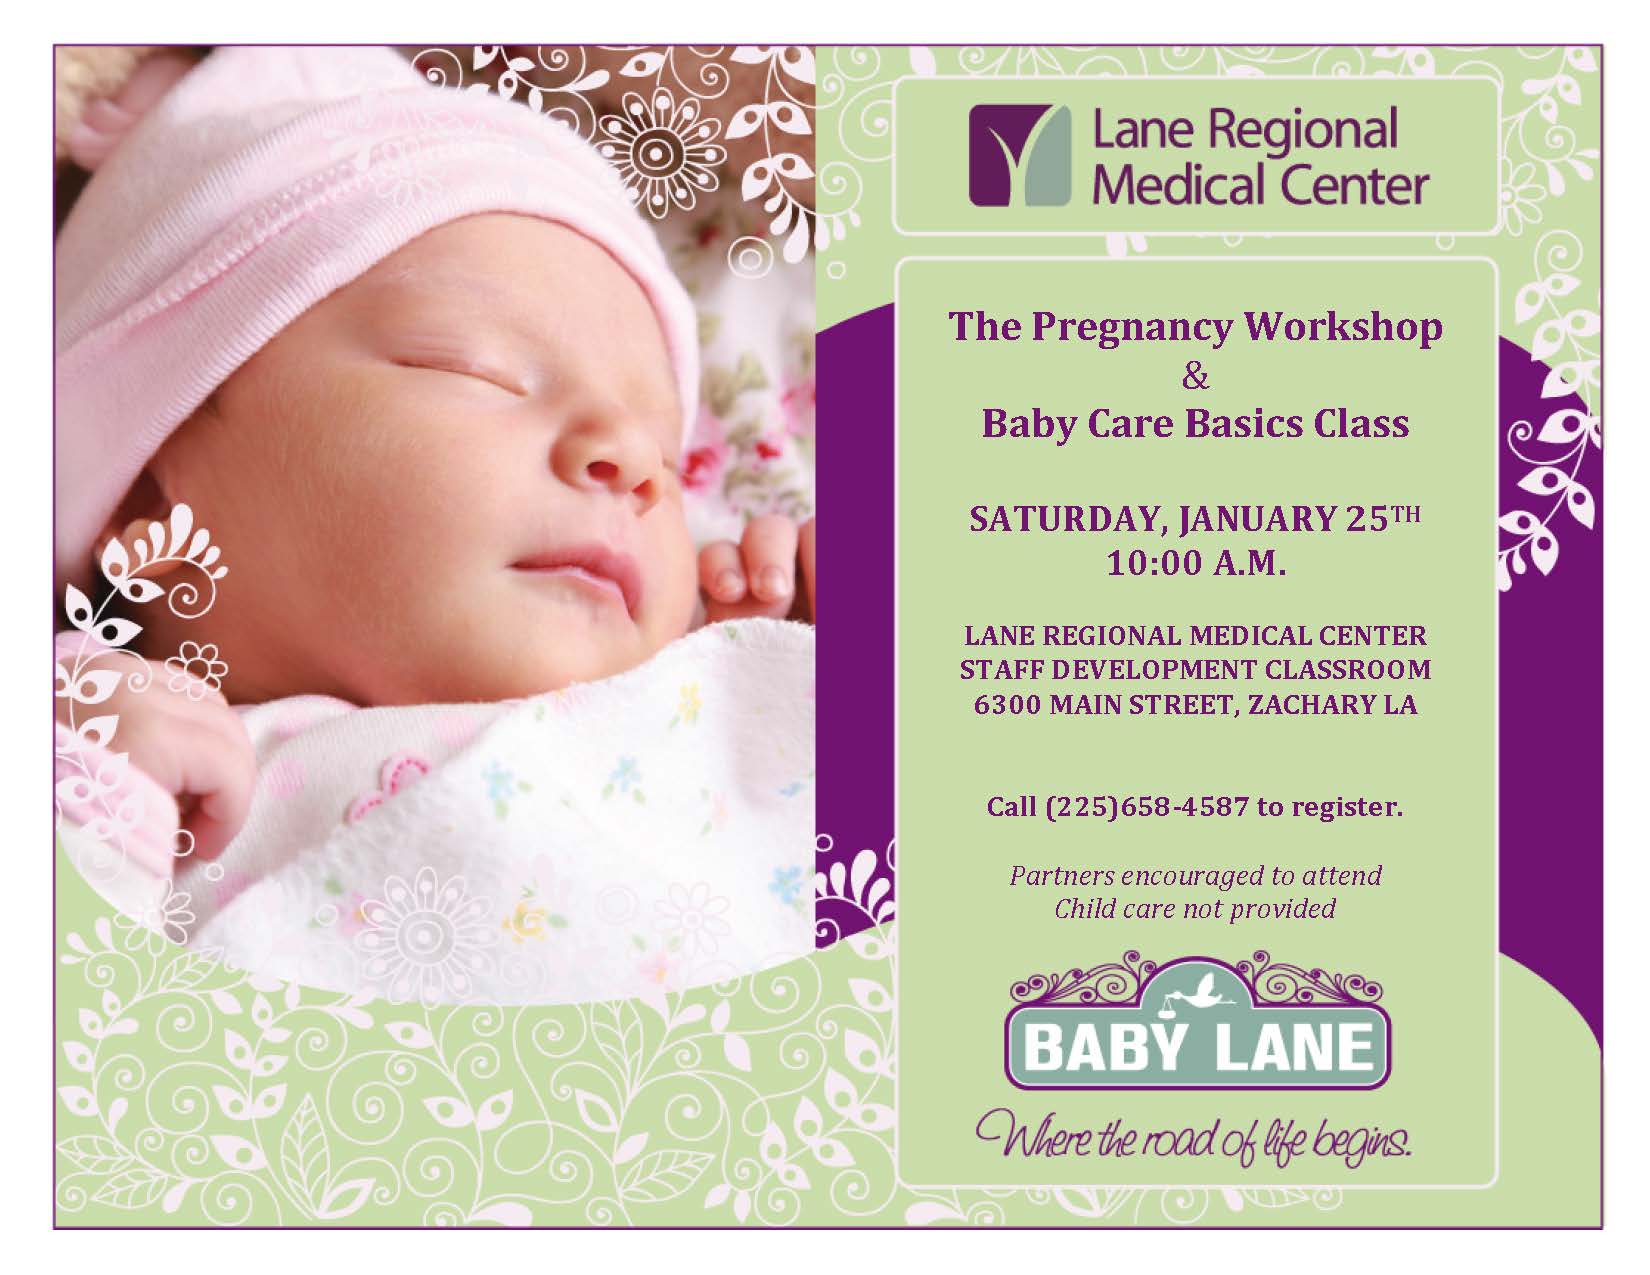 FREE Prenatal & Newborn Baby Care Class at Lane